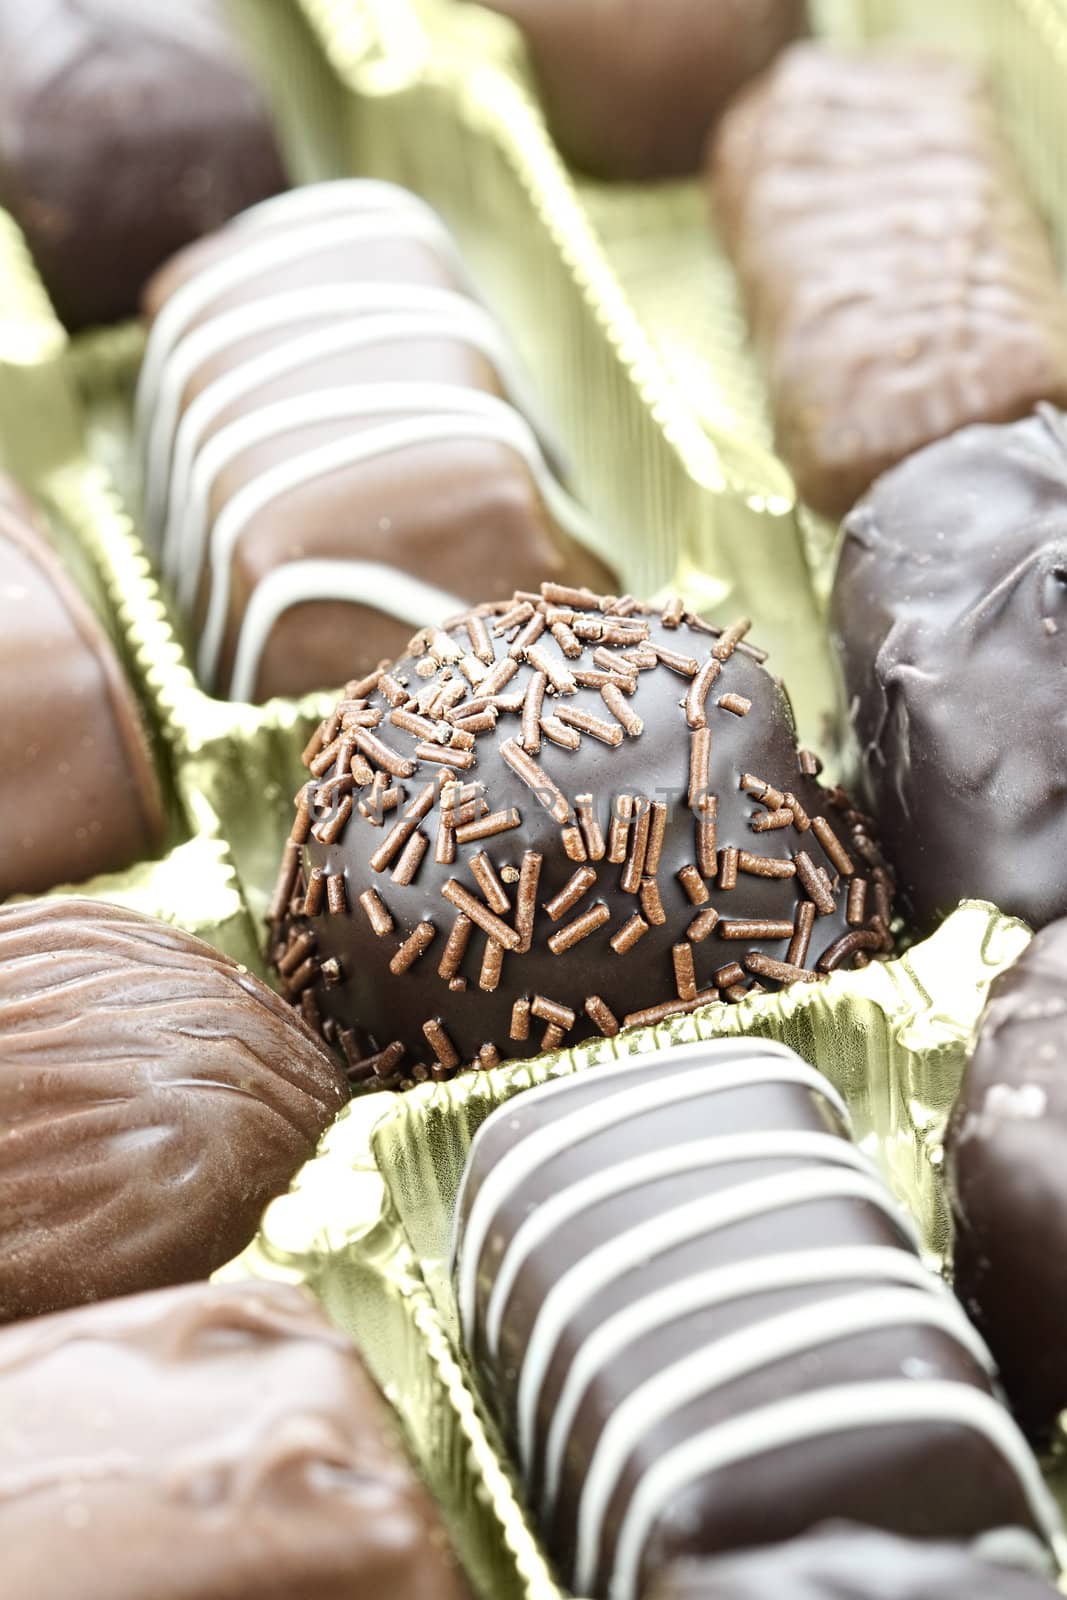 Chocolate Candies by StephanieFrey